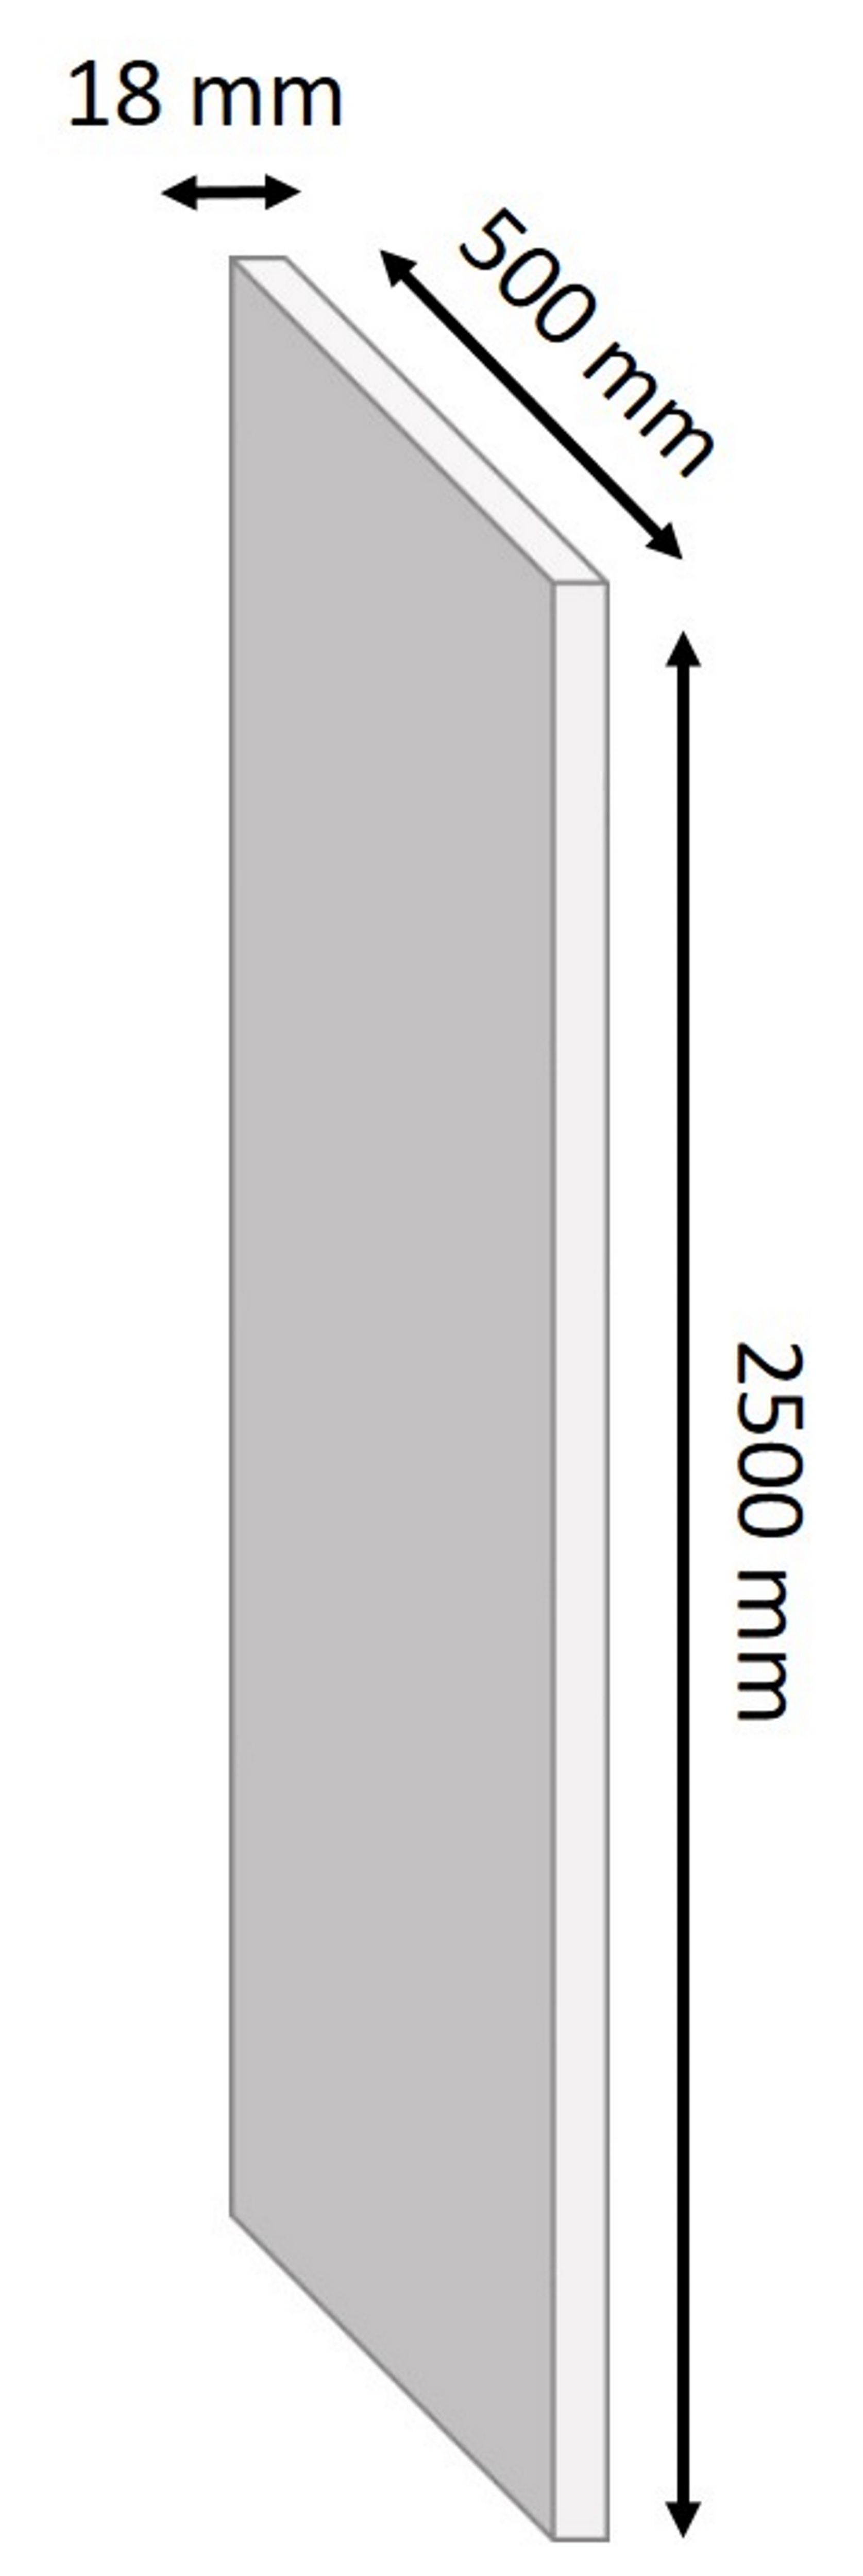 White Semi edged Melamine-faced chipboard (MFC) Furniture board, (L)2.5m (W)500mm (T)18mm